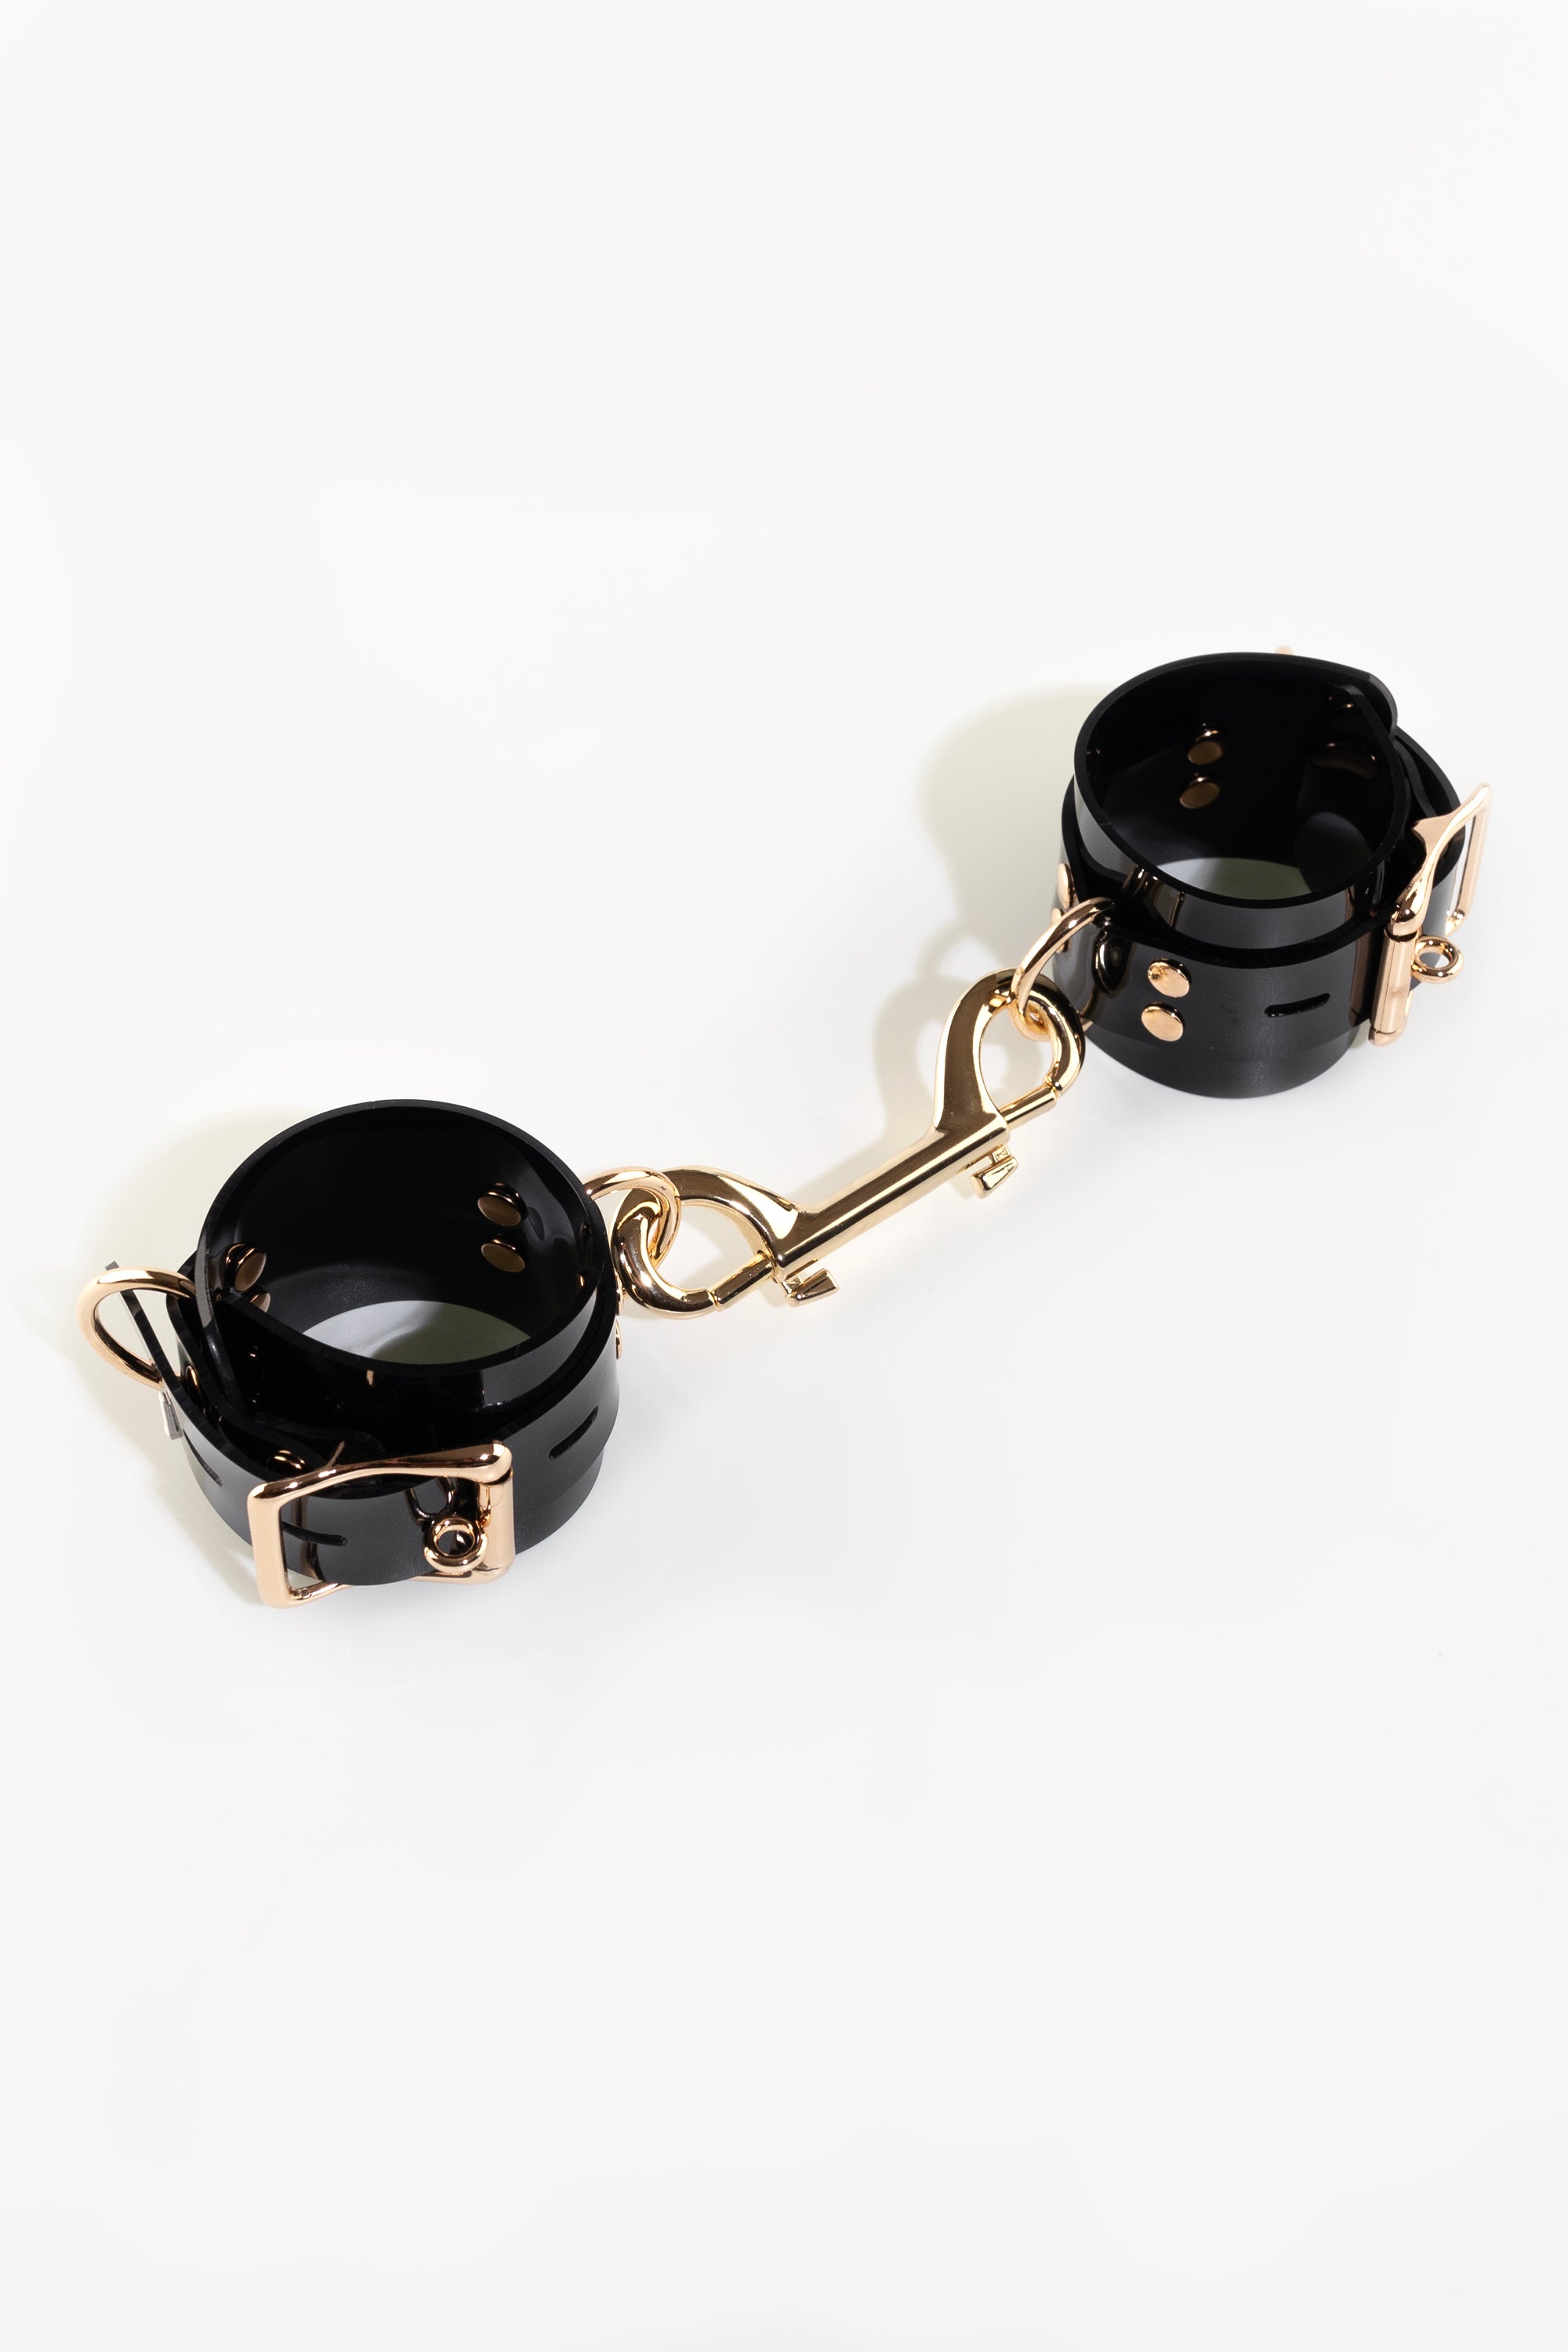 Lockable wrist cuffs, black/gold